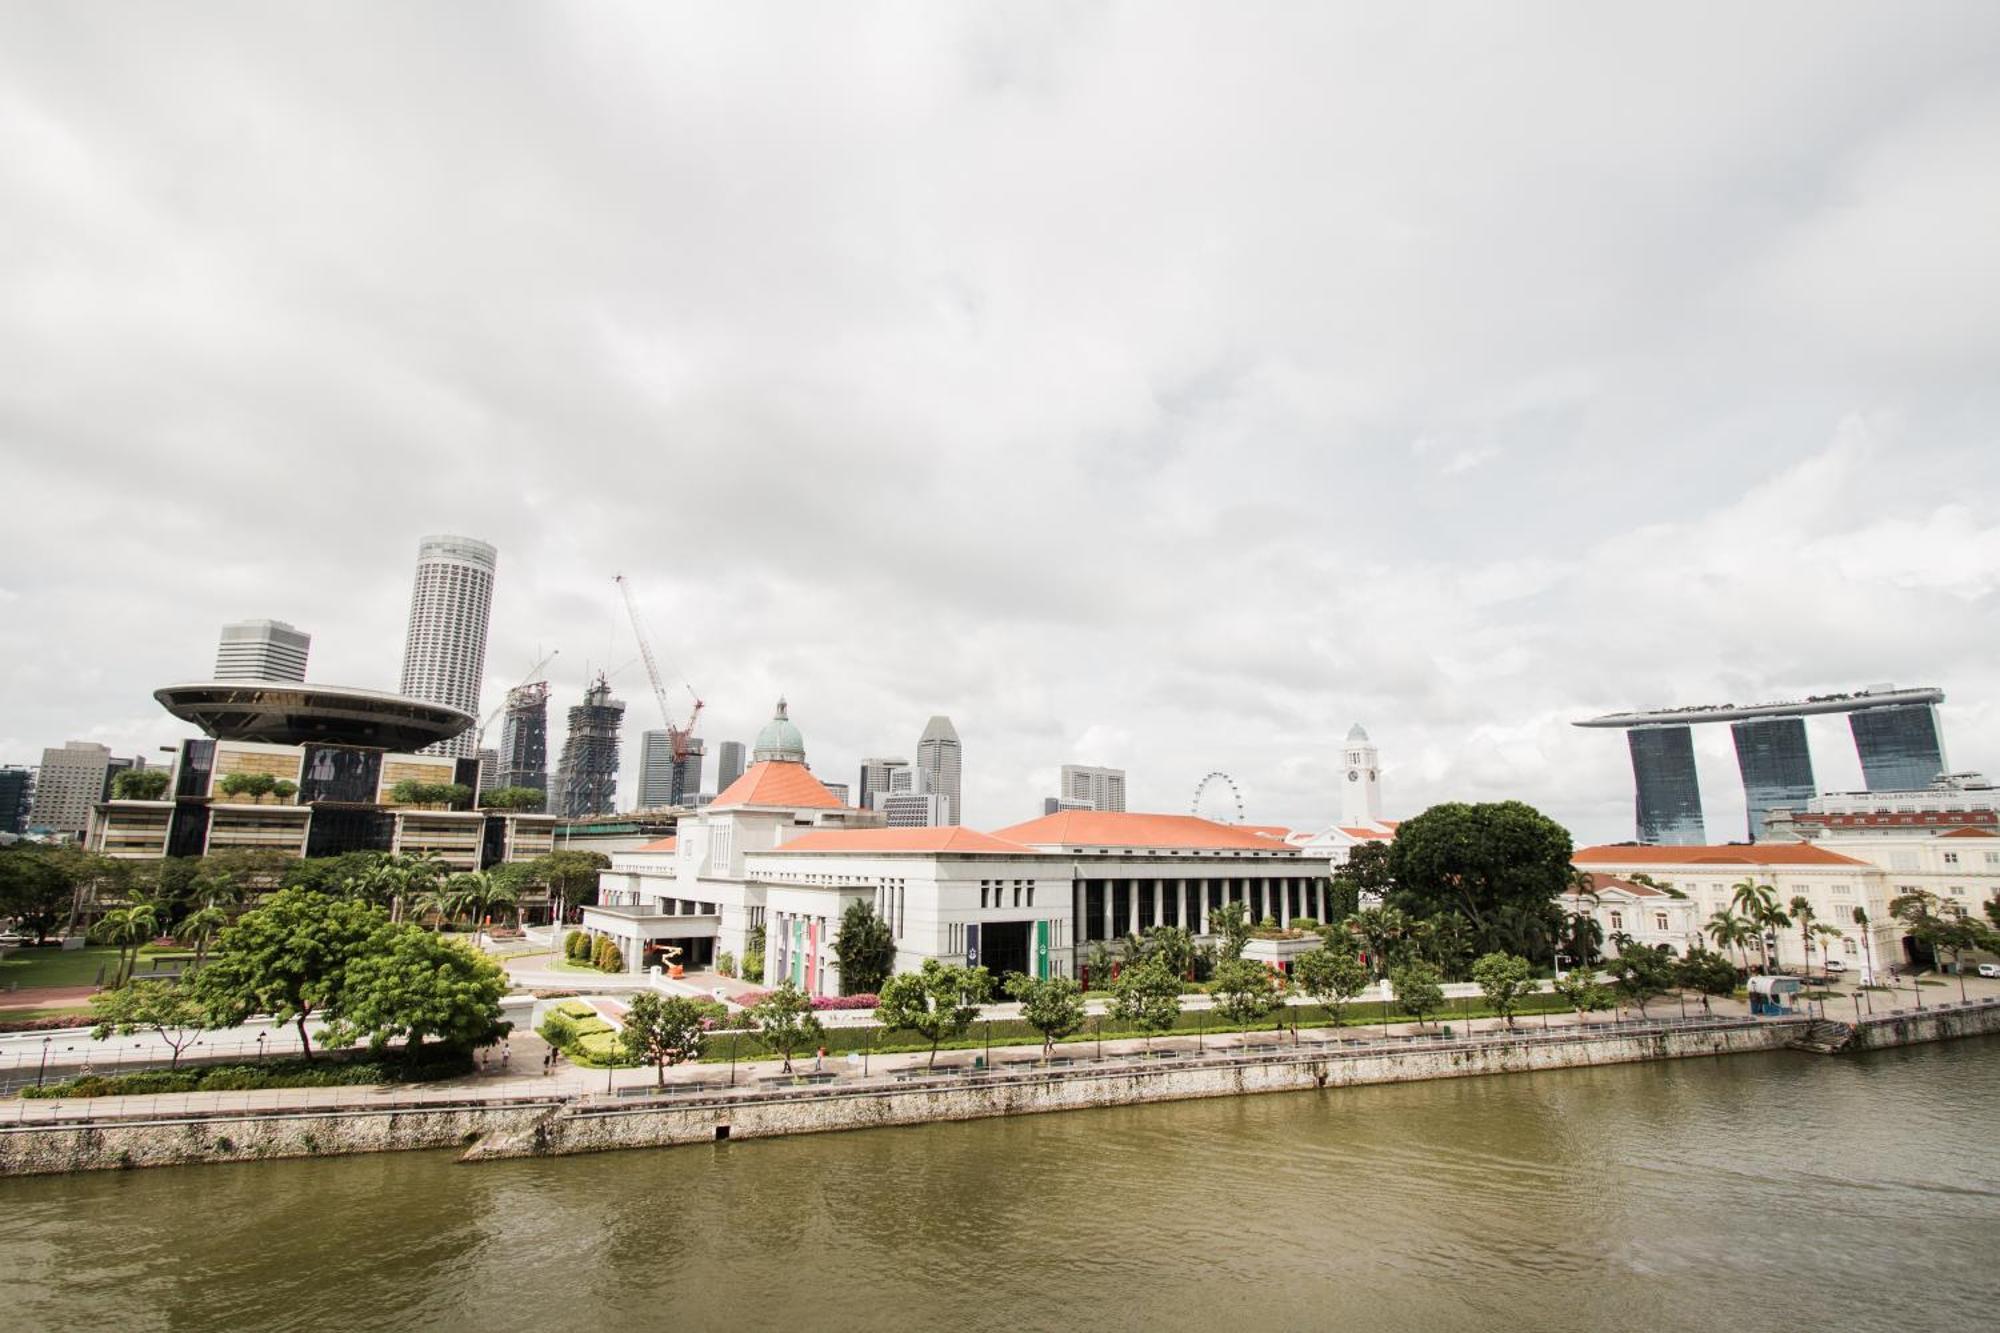 Heritage Collection On Boat Quay - South Bridge Wing Singapore Eksteriør billede